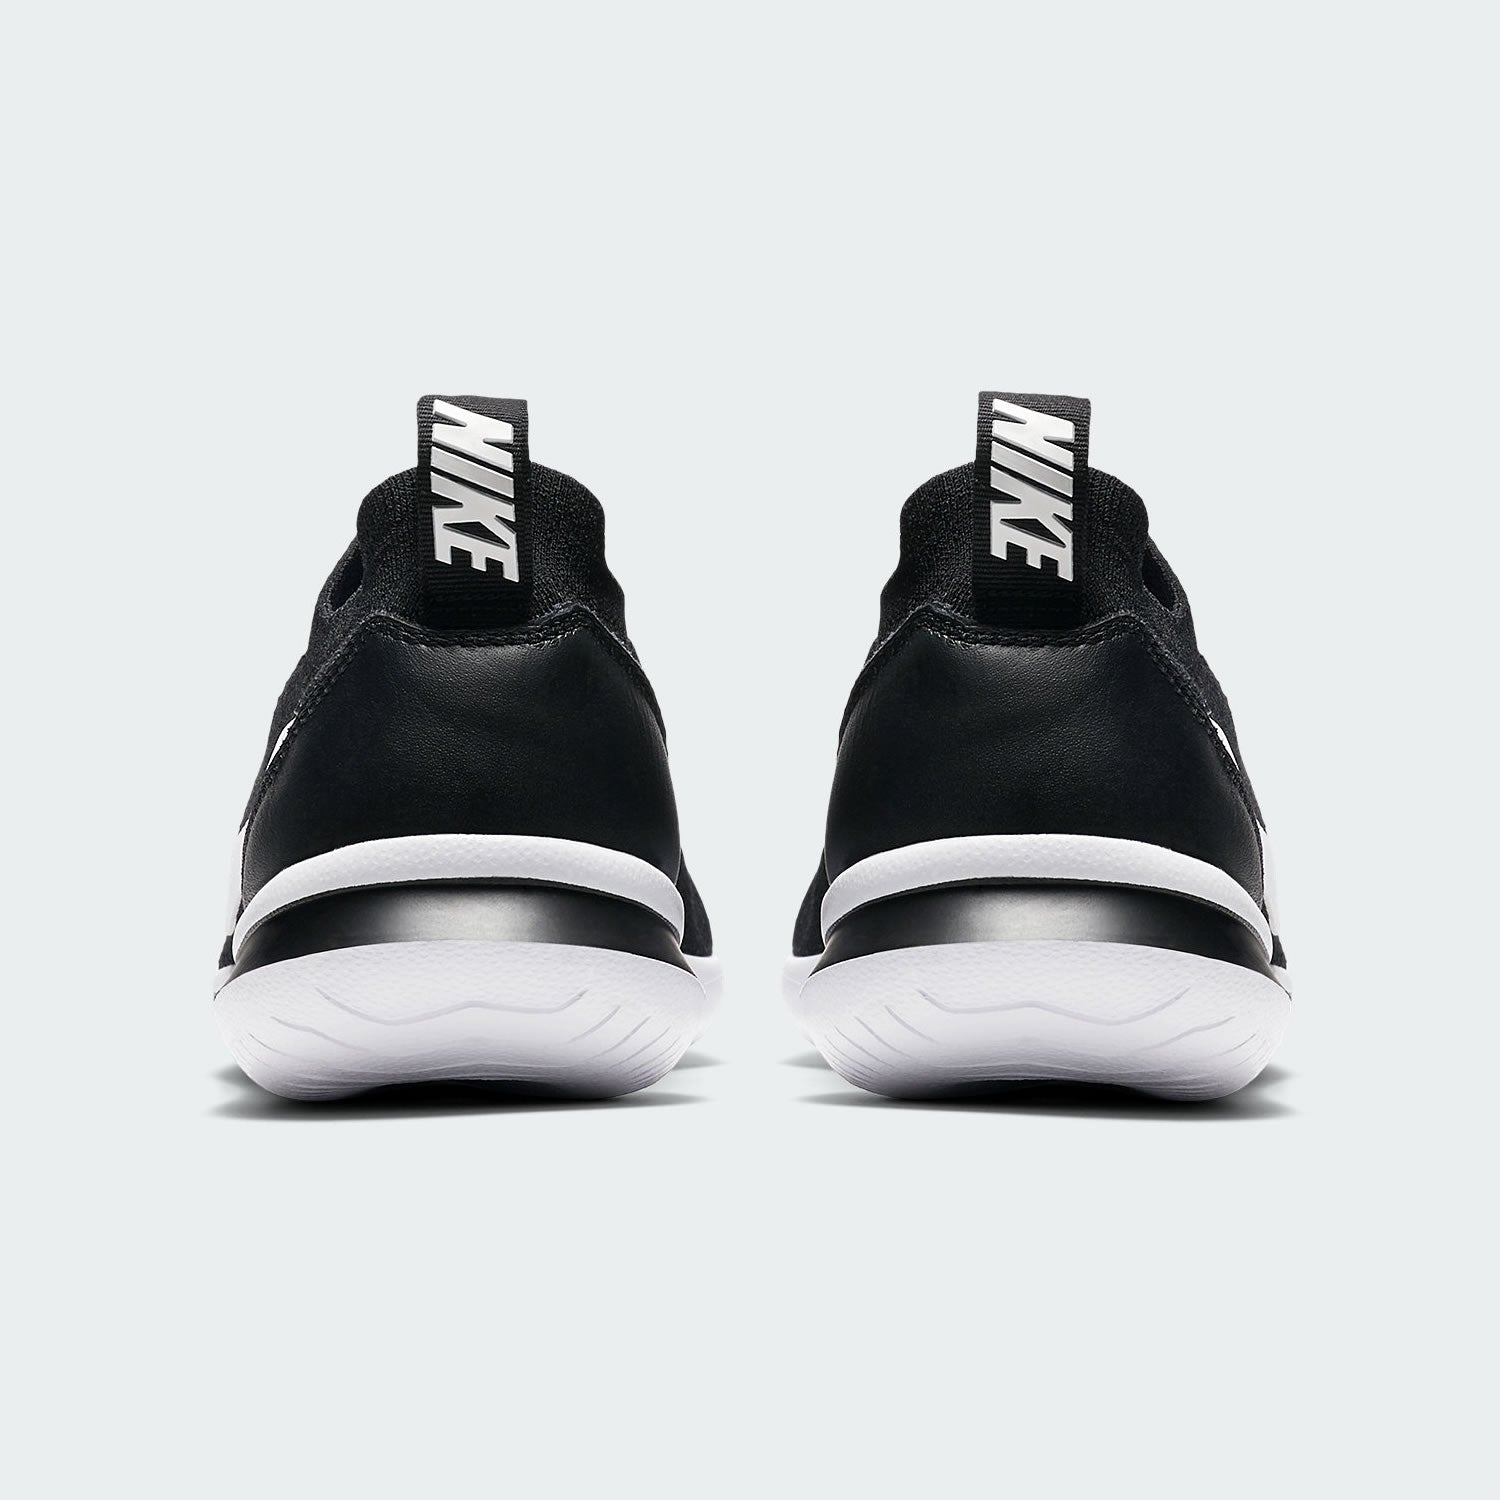 tradesports.co.uk Nike Men's Cortez Flyknit Shoes AA2029 001 Black